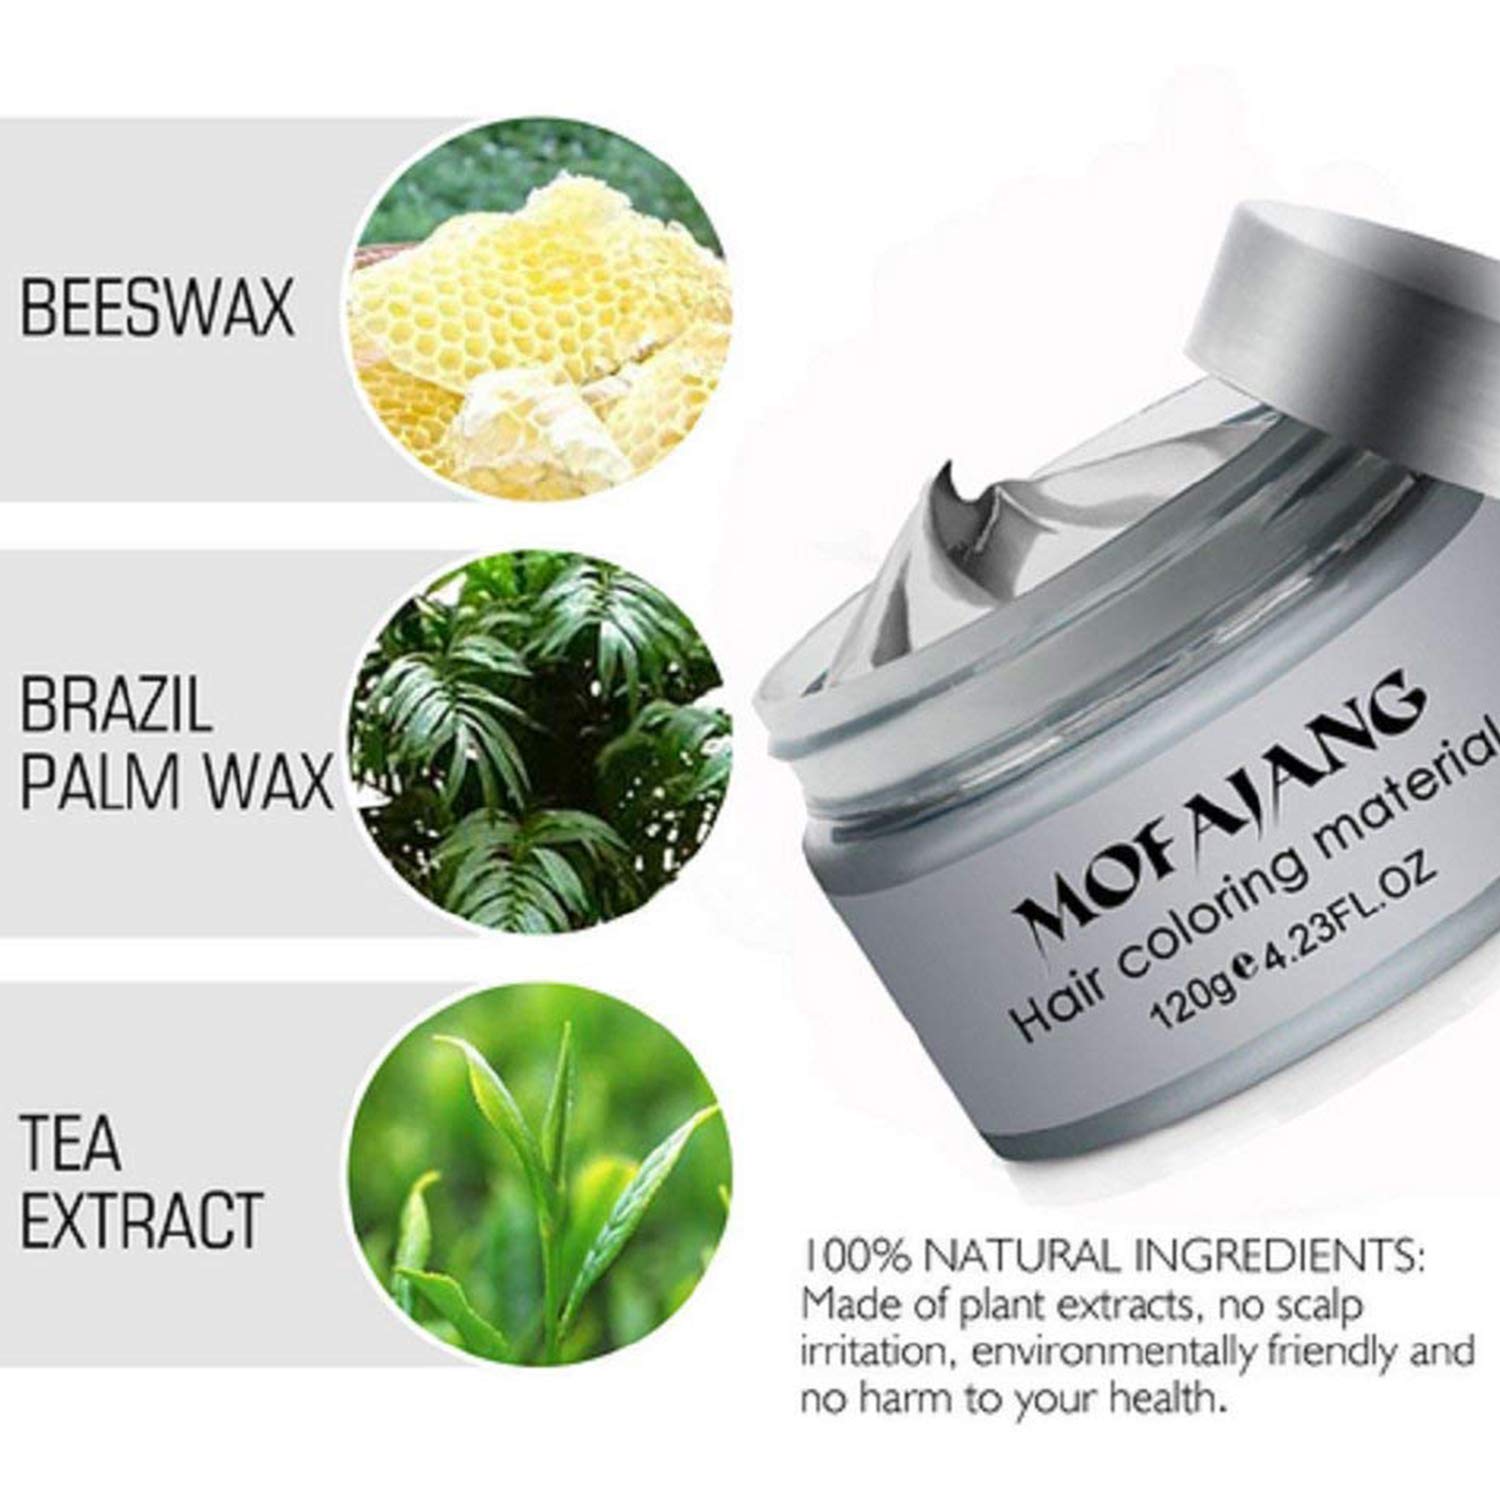 Mofajang Hair Wax Color Styling Cream Mud, Natural Hairstyle Color Pomade, Washable Temporary (Gray)